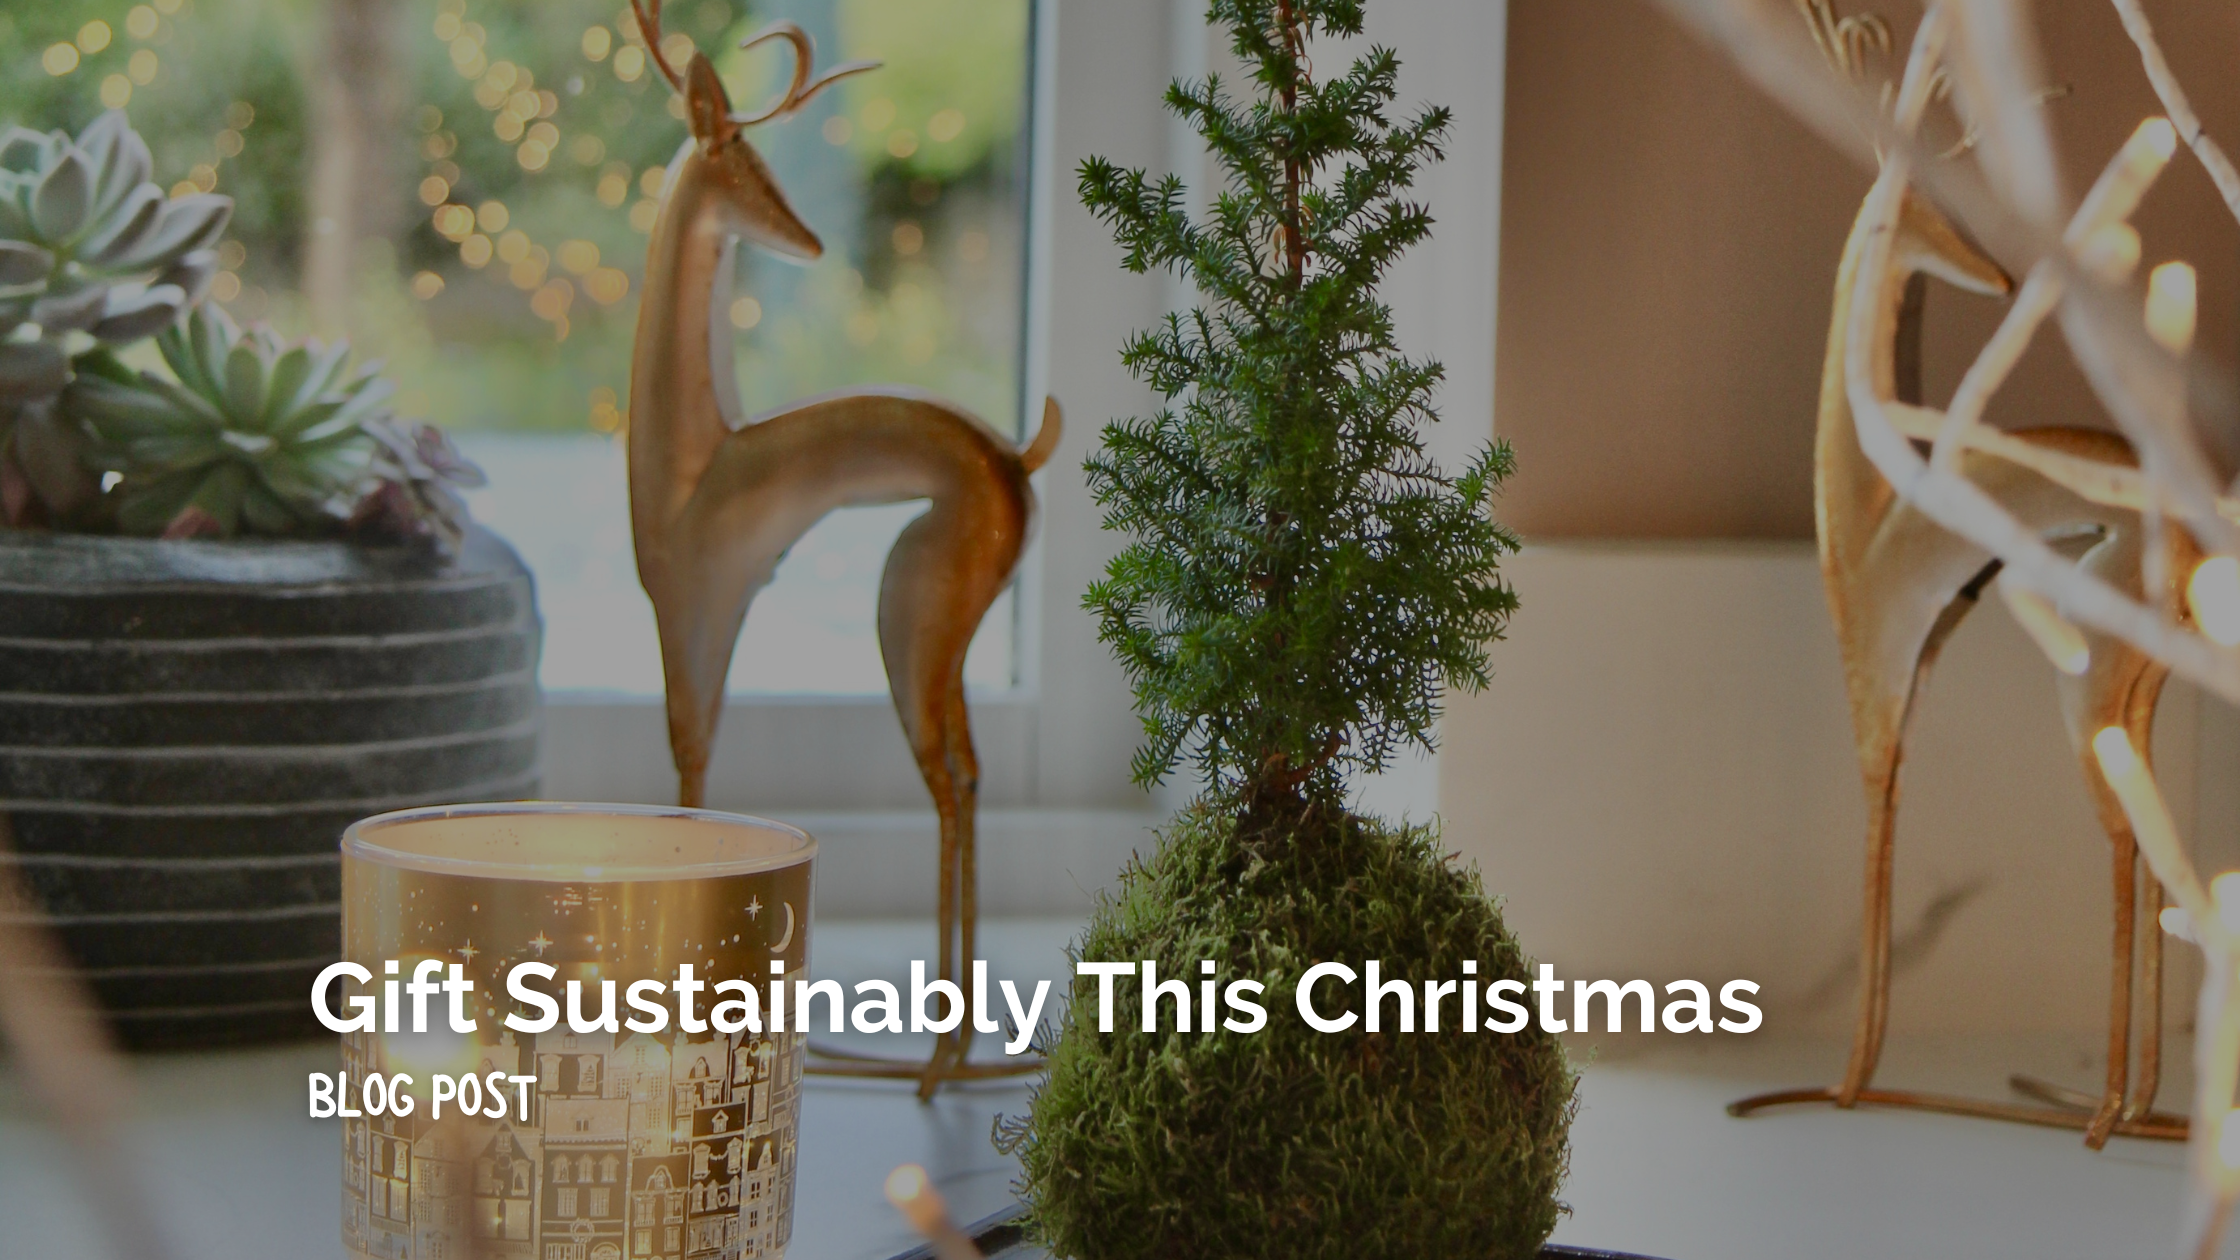 Gift Sustainably this Christmas with Handmade Kokedama Houseplants